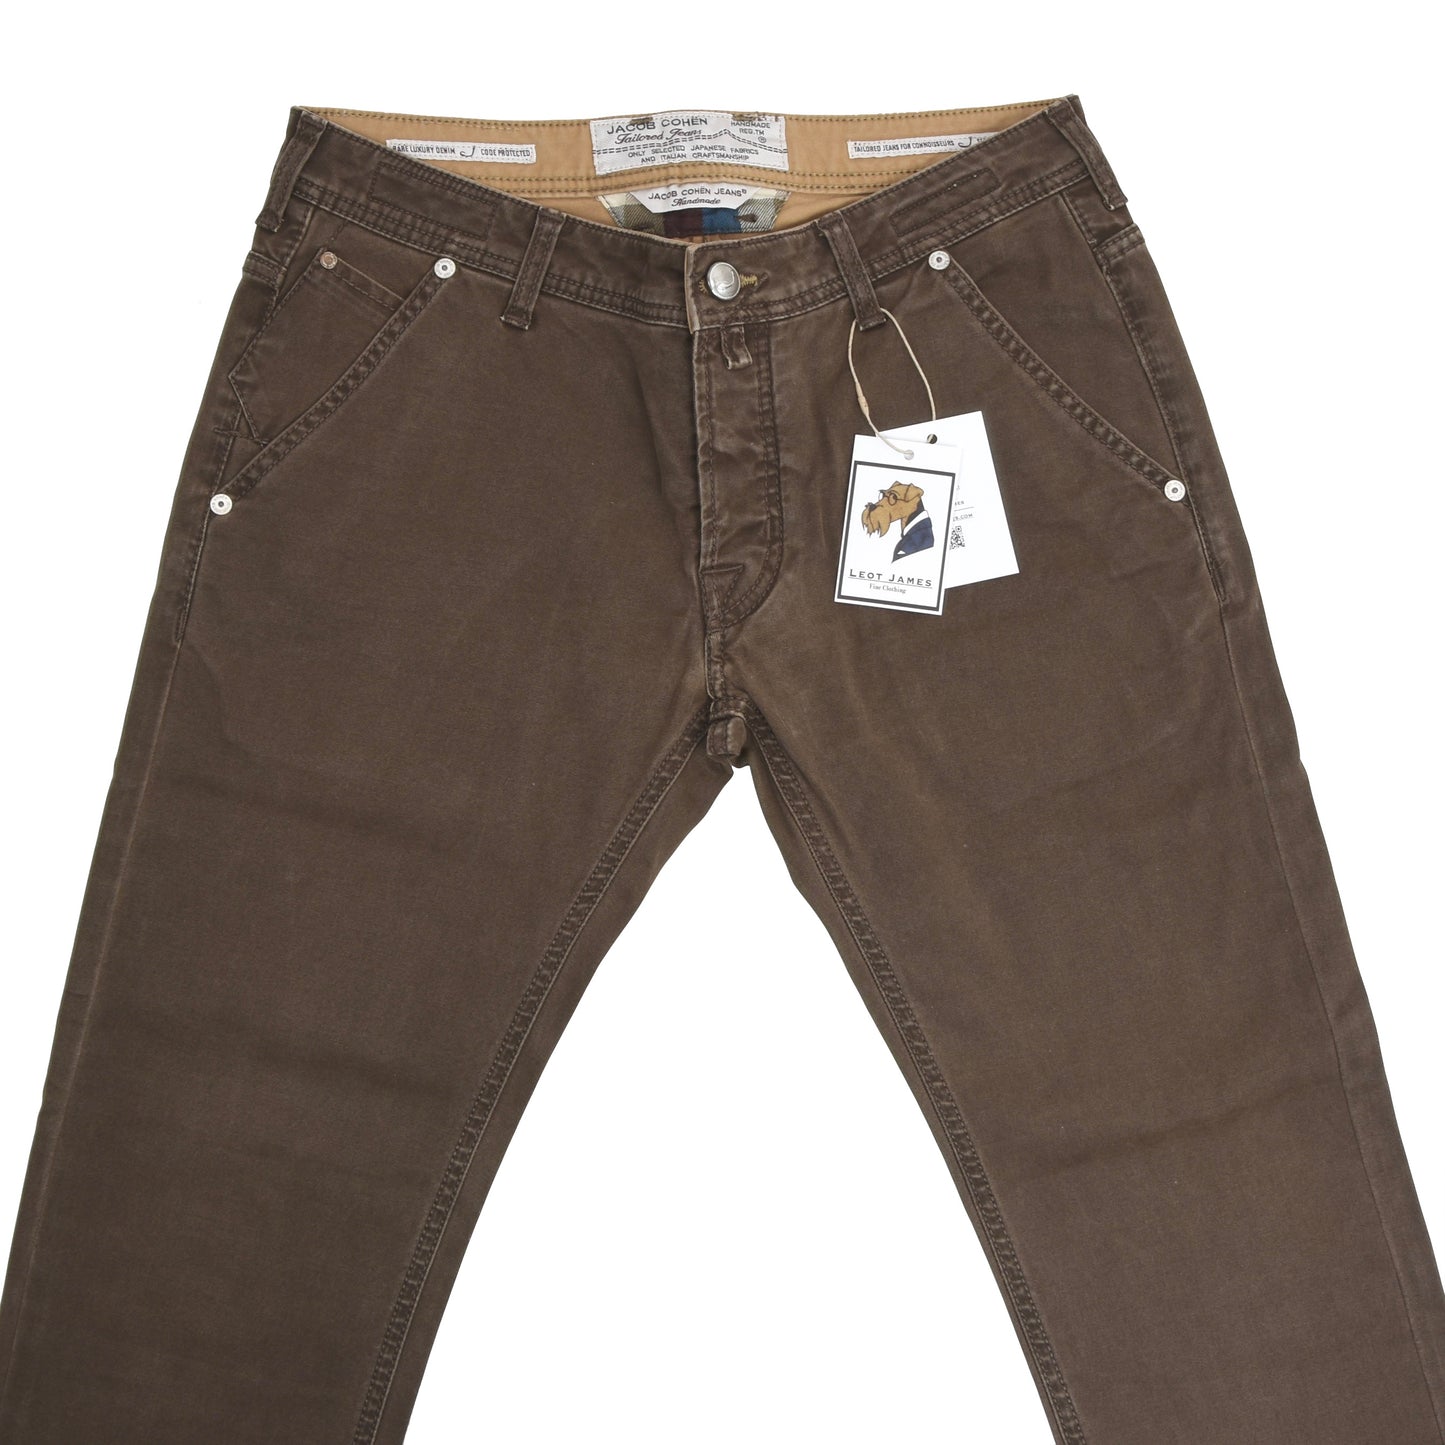 Jacob Cohën Jeans Model J613 Comfort Size W35 - Brown